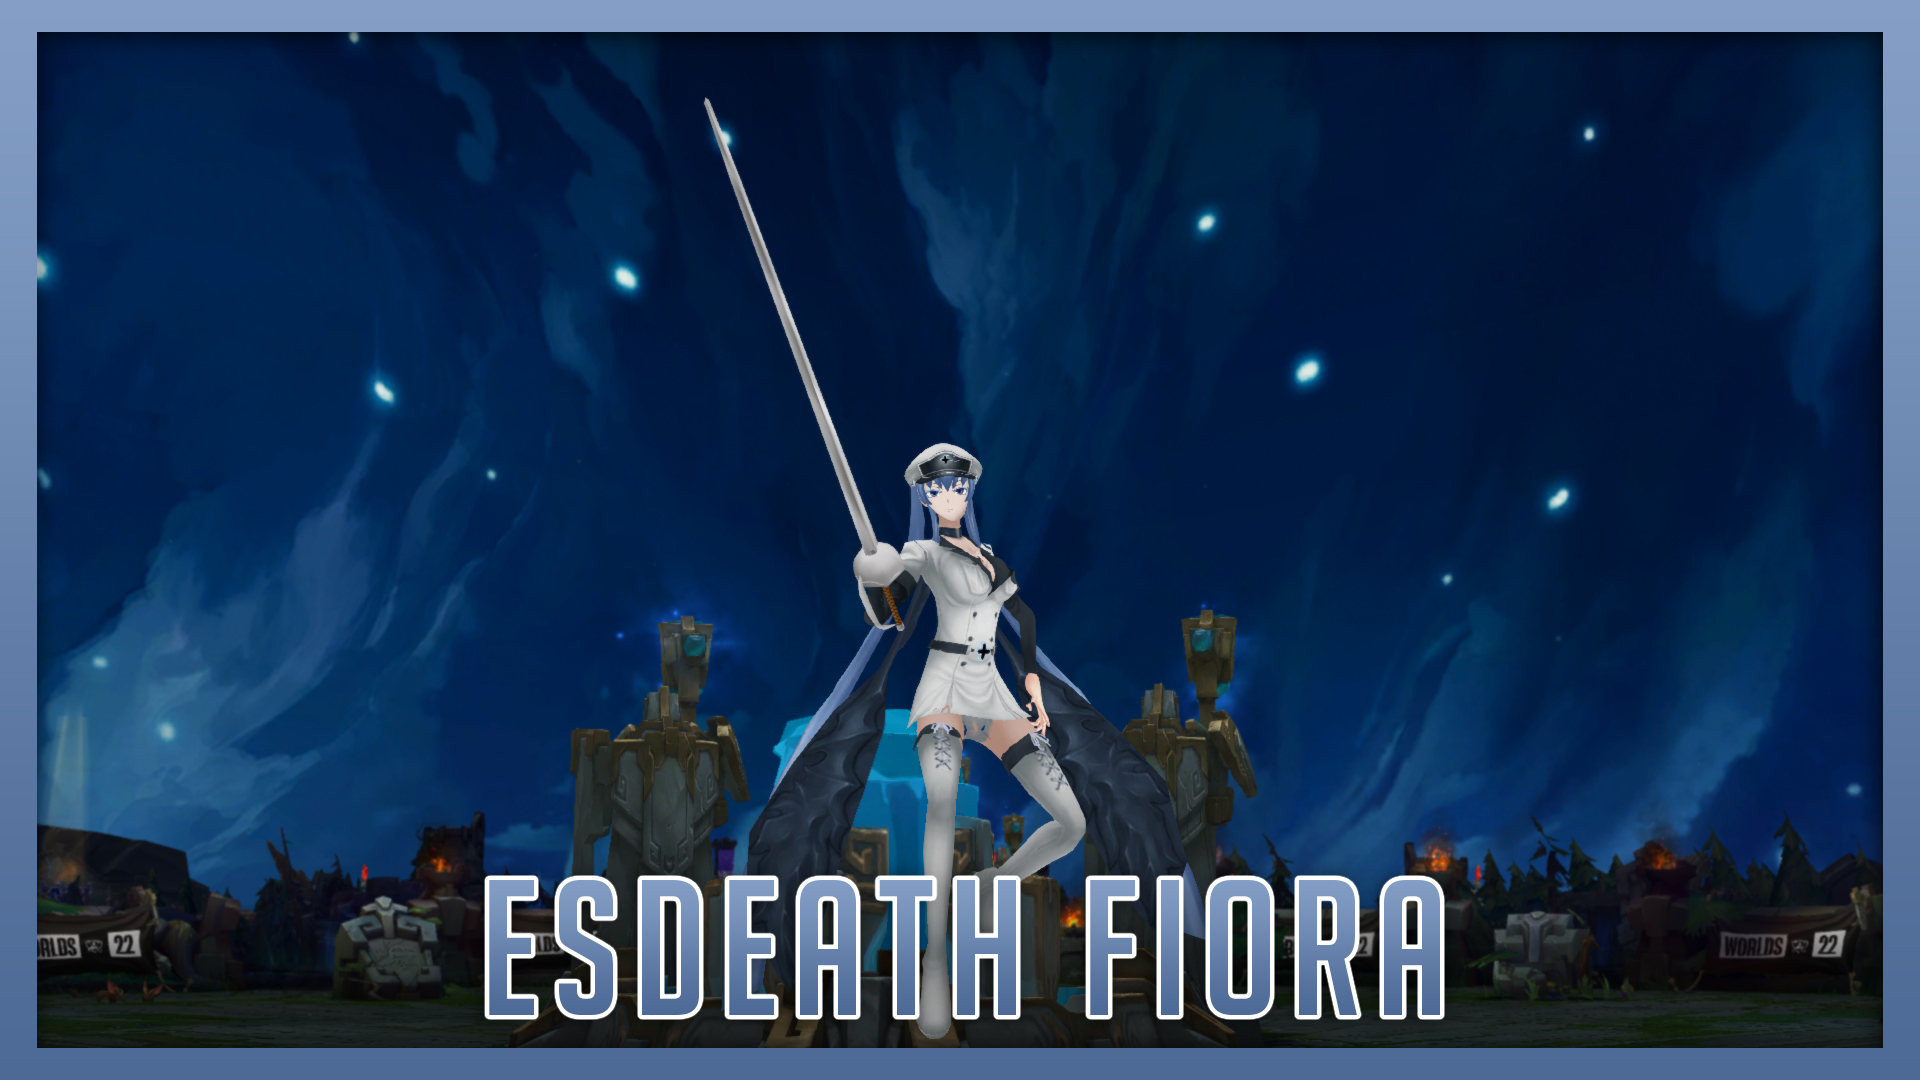 Esdeath Fiora